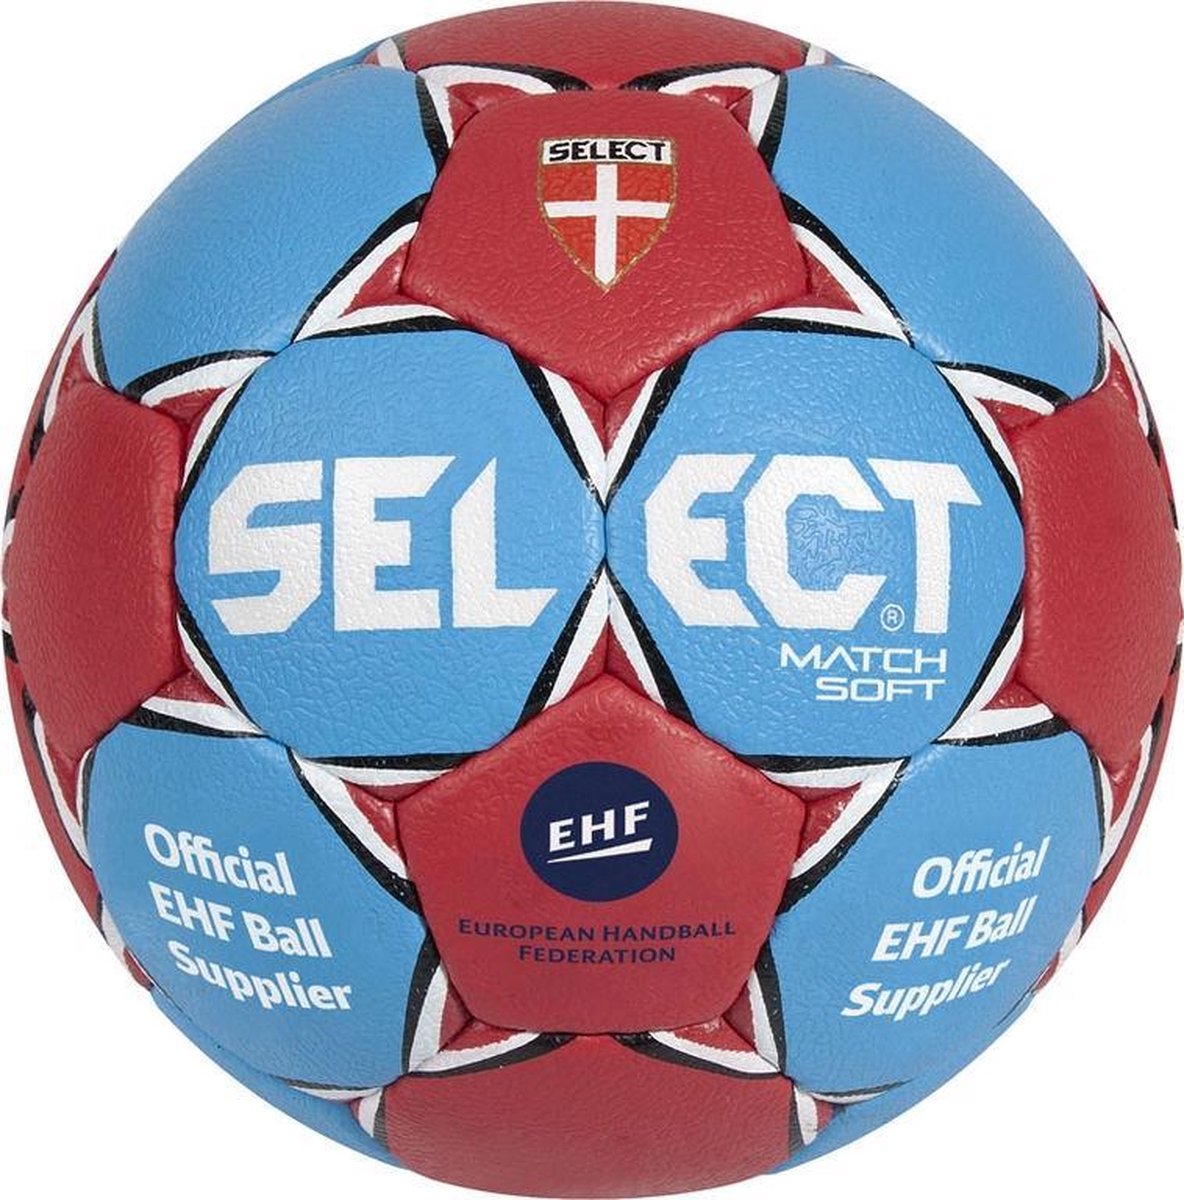 Select Handbal Match Soft maat 3